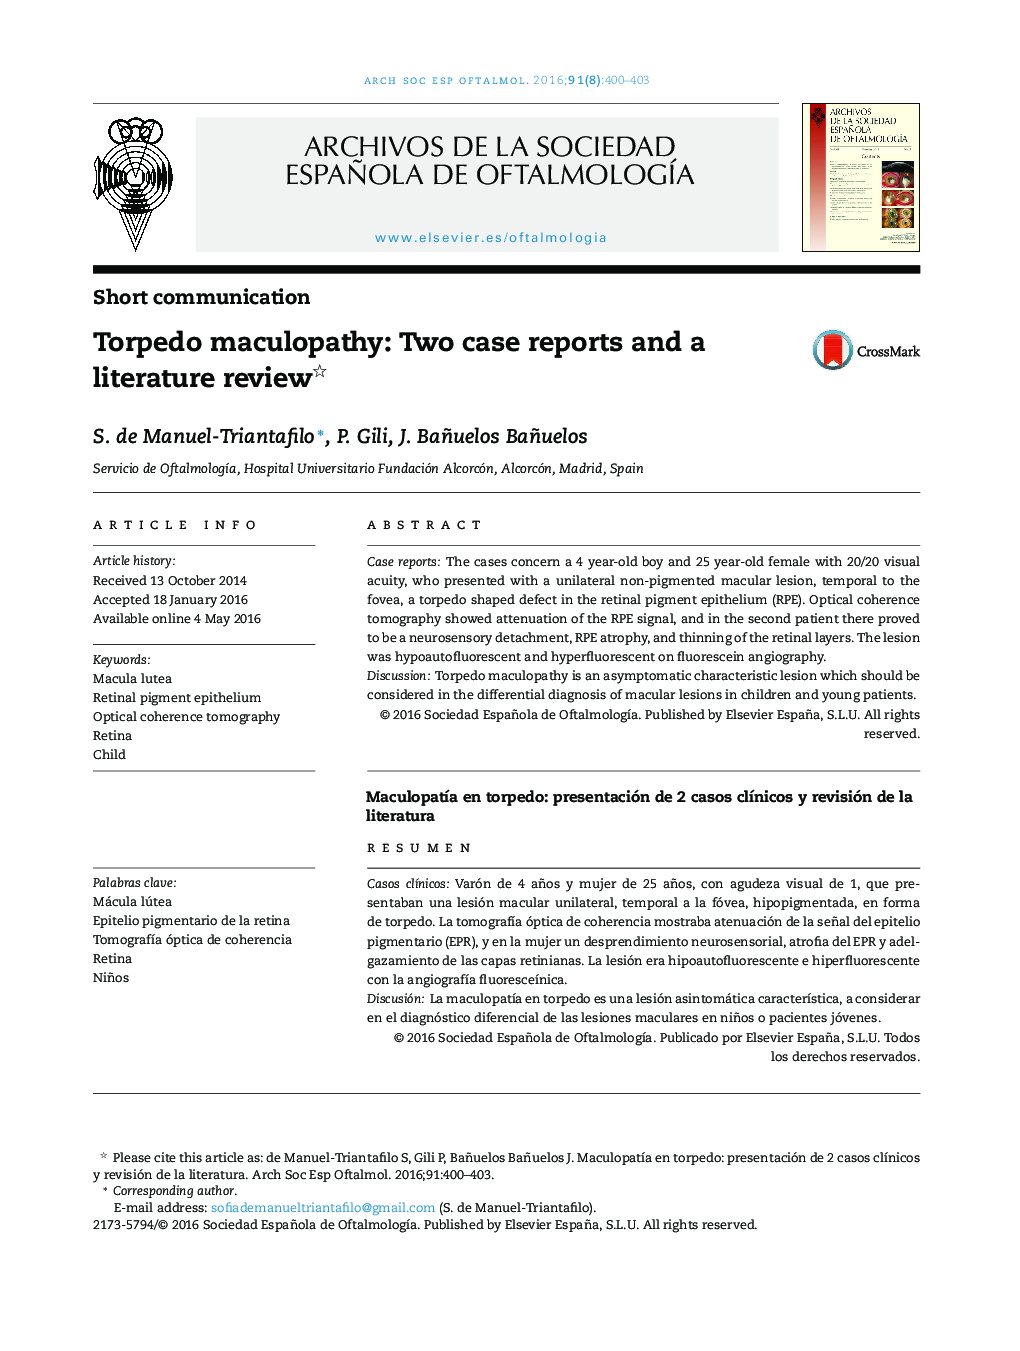 maculopathy Torpedo: گزارش دو مورد و بررسی مقالات